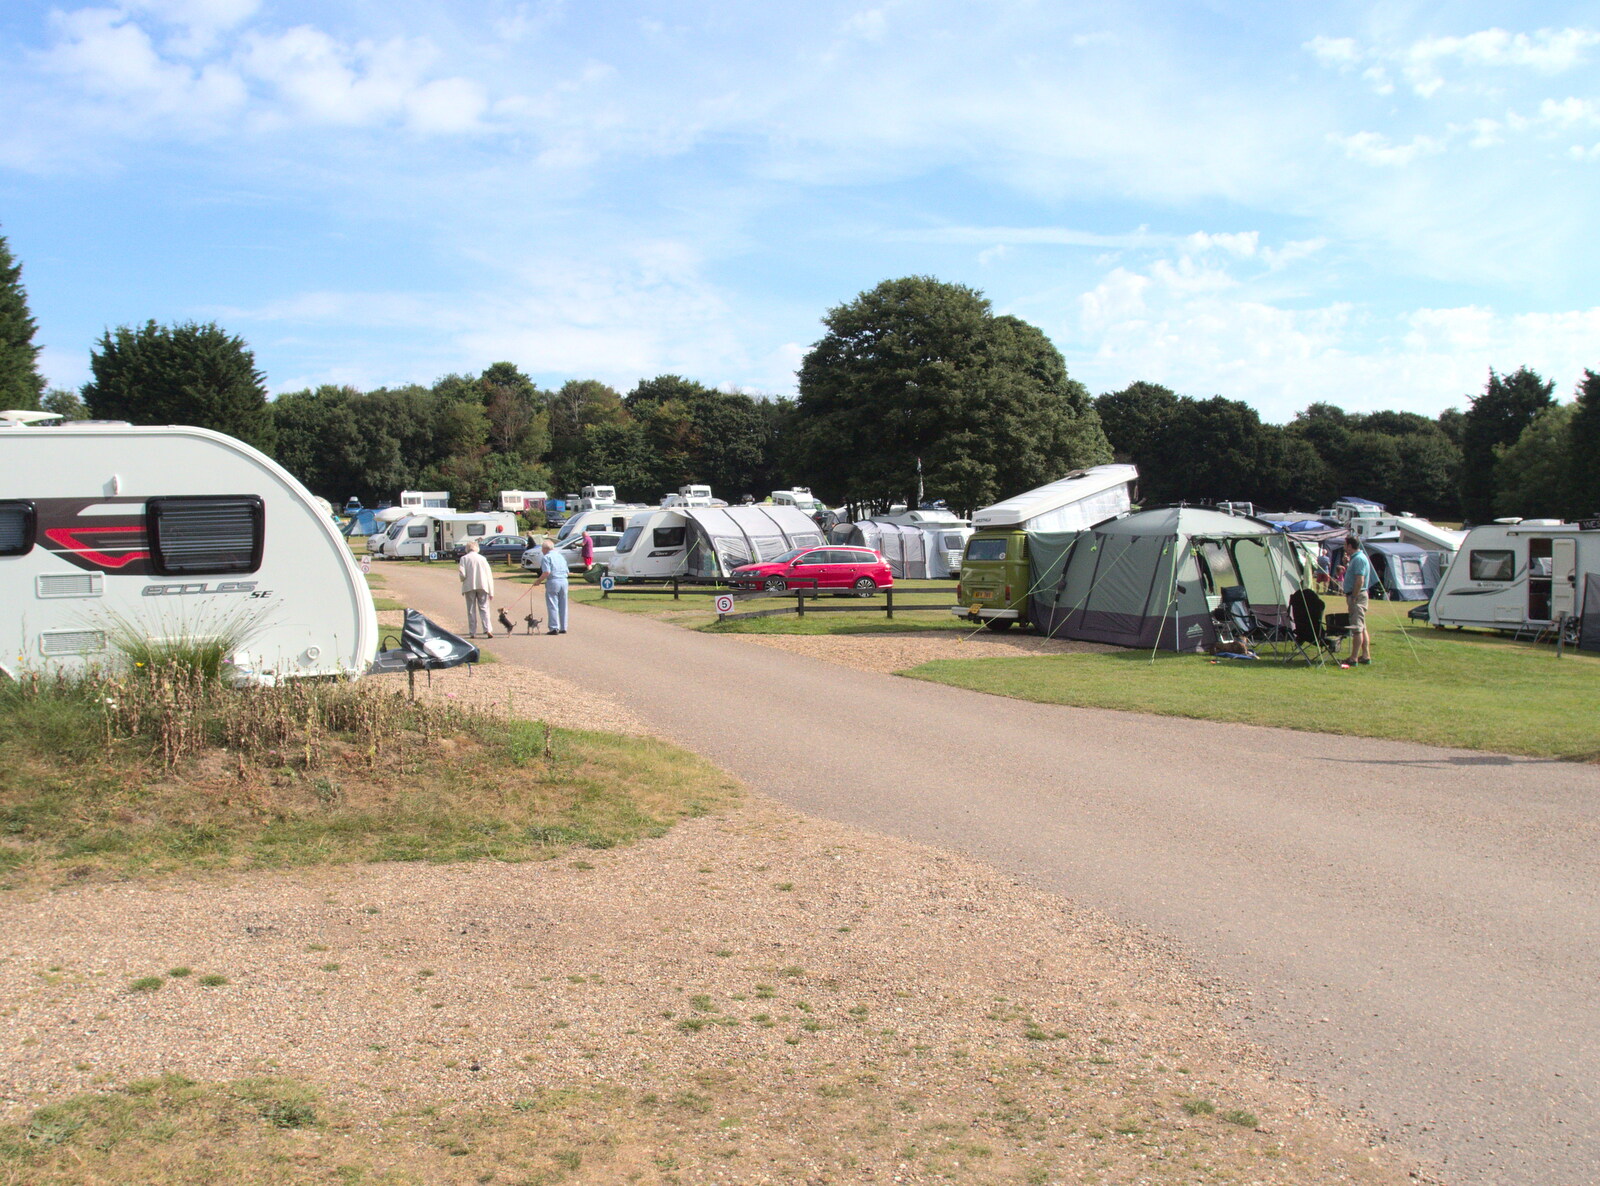 Caravan city from Camping in West Runton, North Norfolk - 30th July 2016